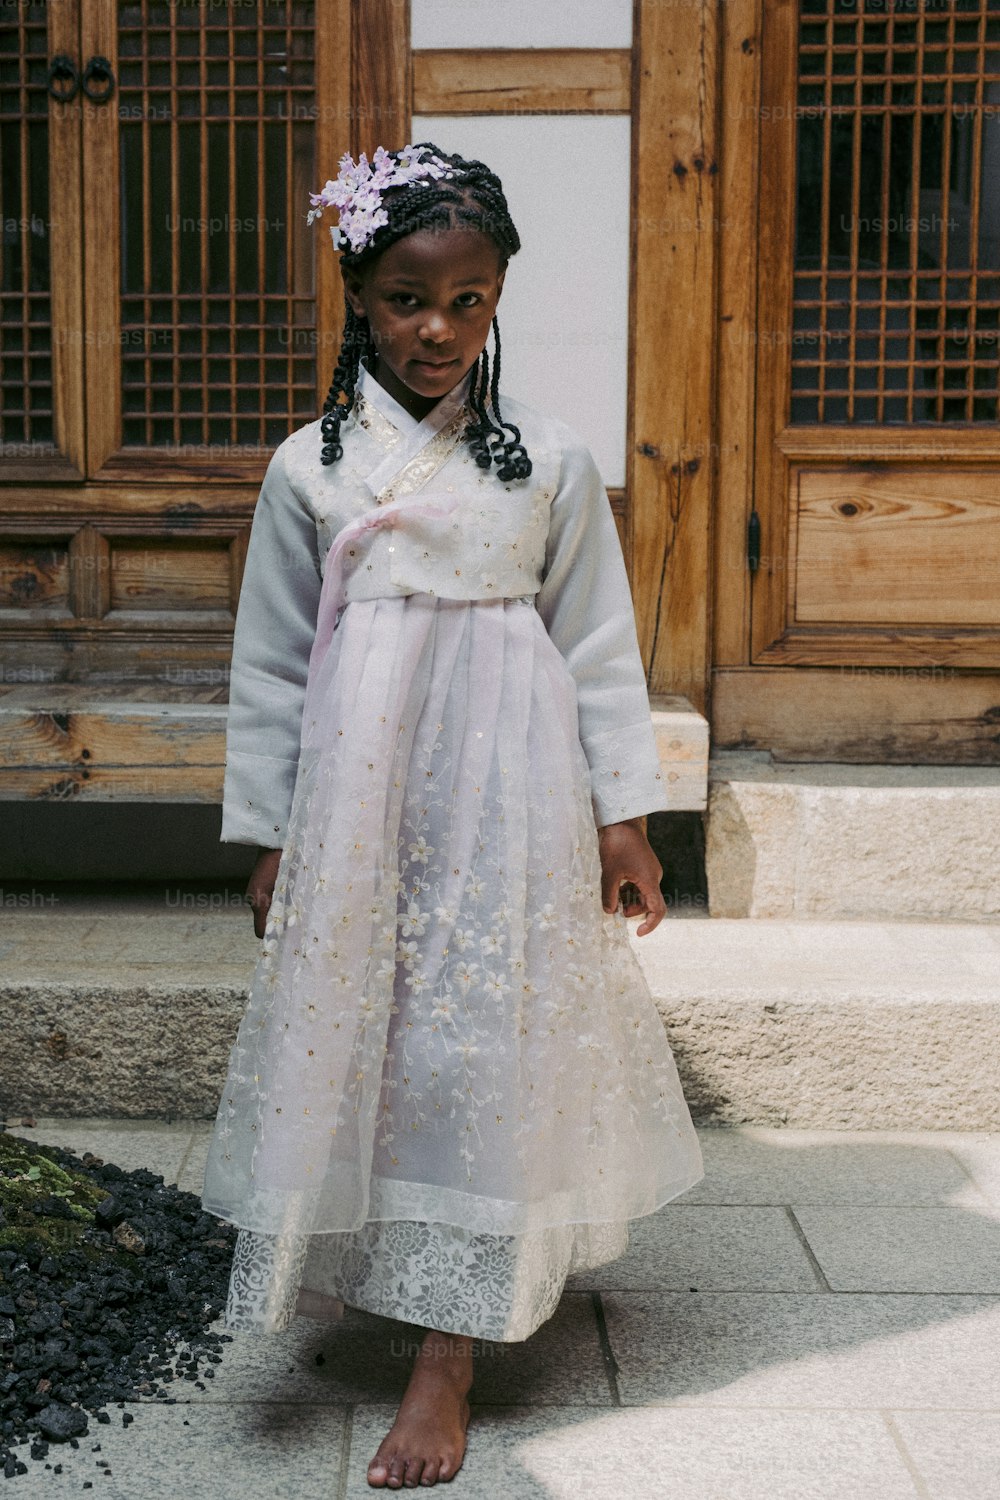 a little girl in a dress standing on a sidewalk